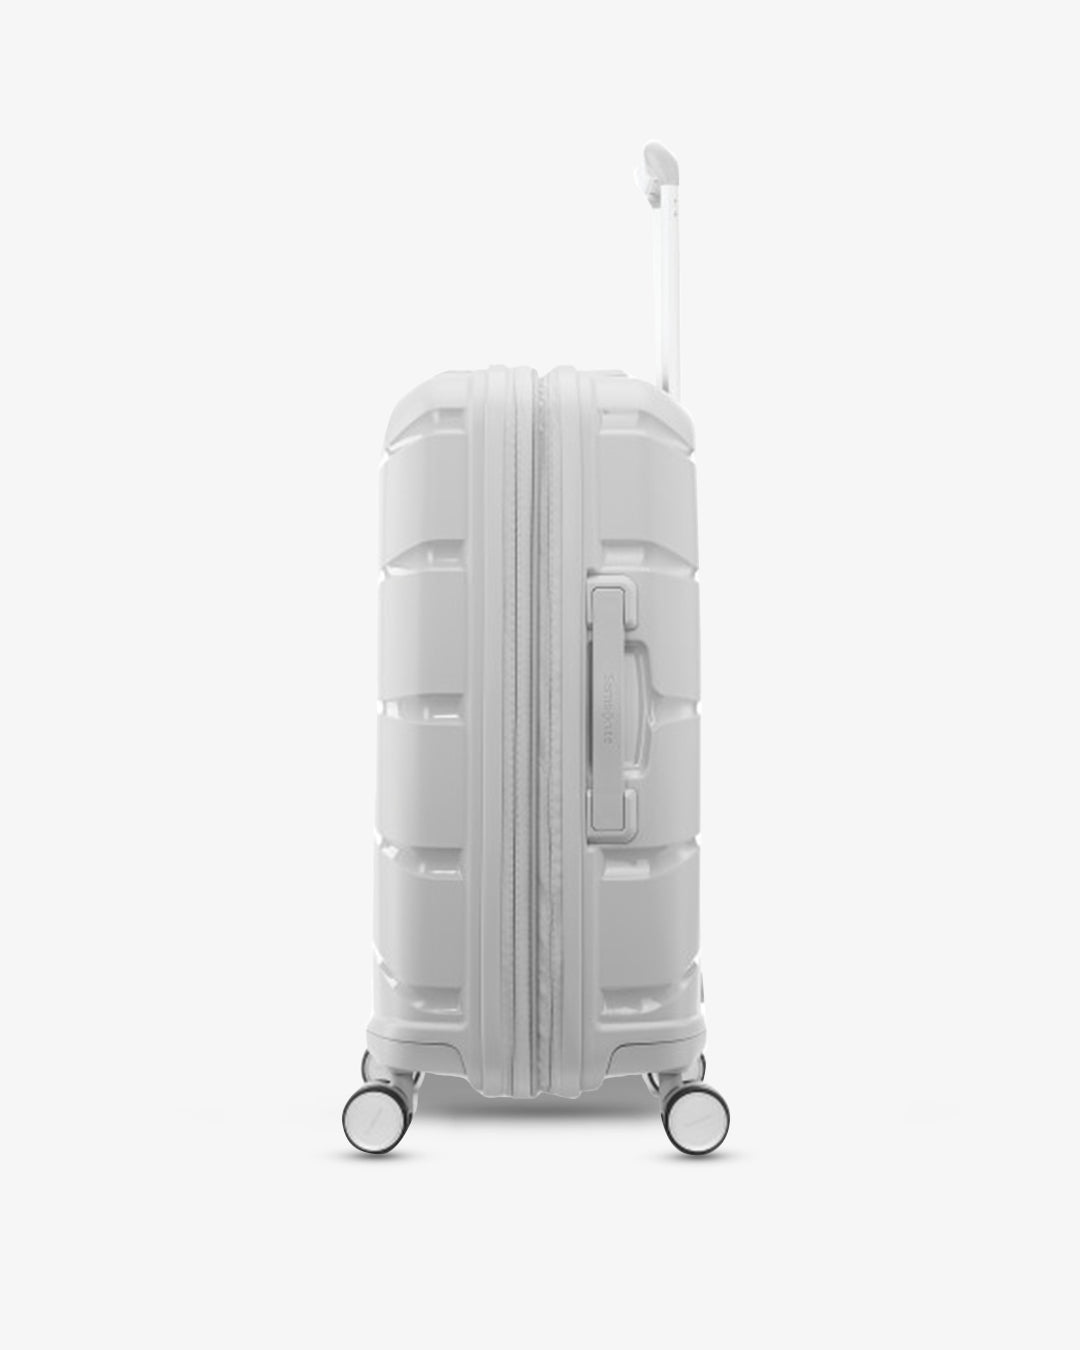 Samsonite Outline Pro Hardside Luggage (SMALL)